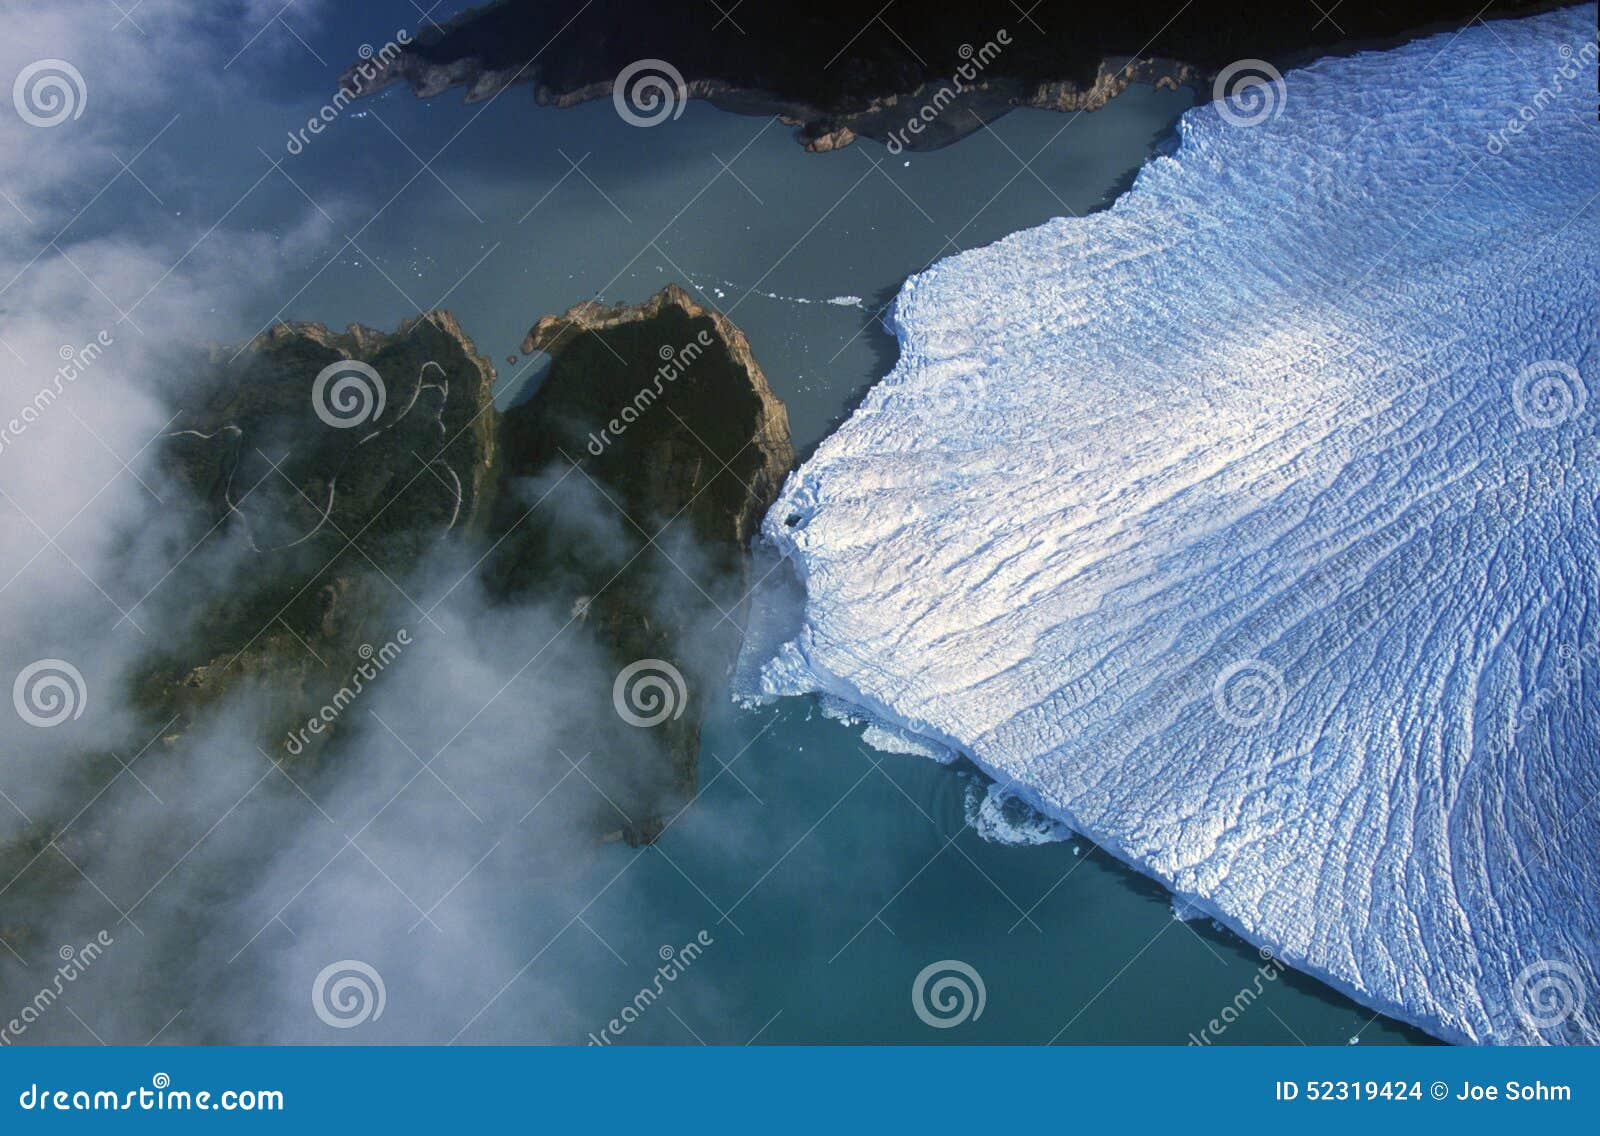 aerial view of perito moreno glacier near el calafate, patagonia, argentina